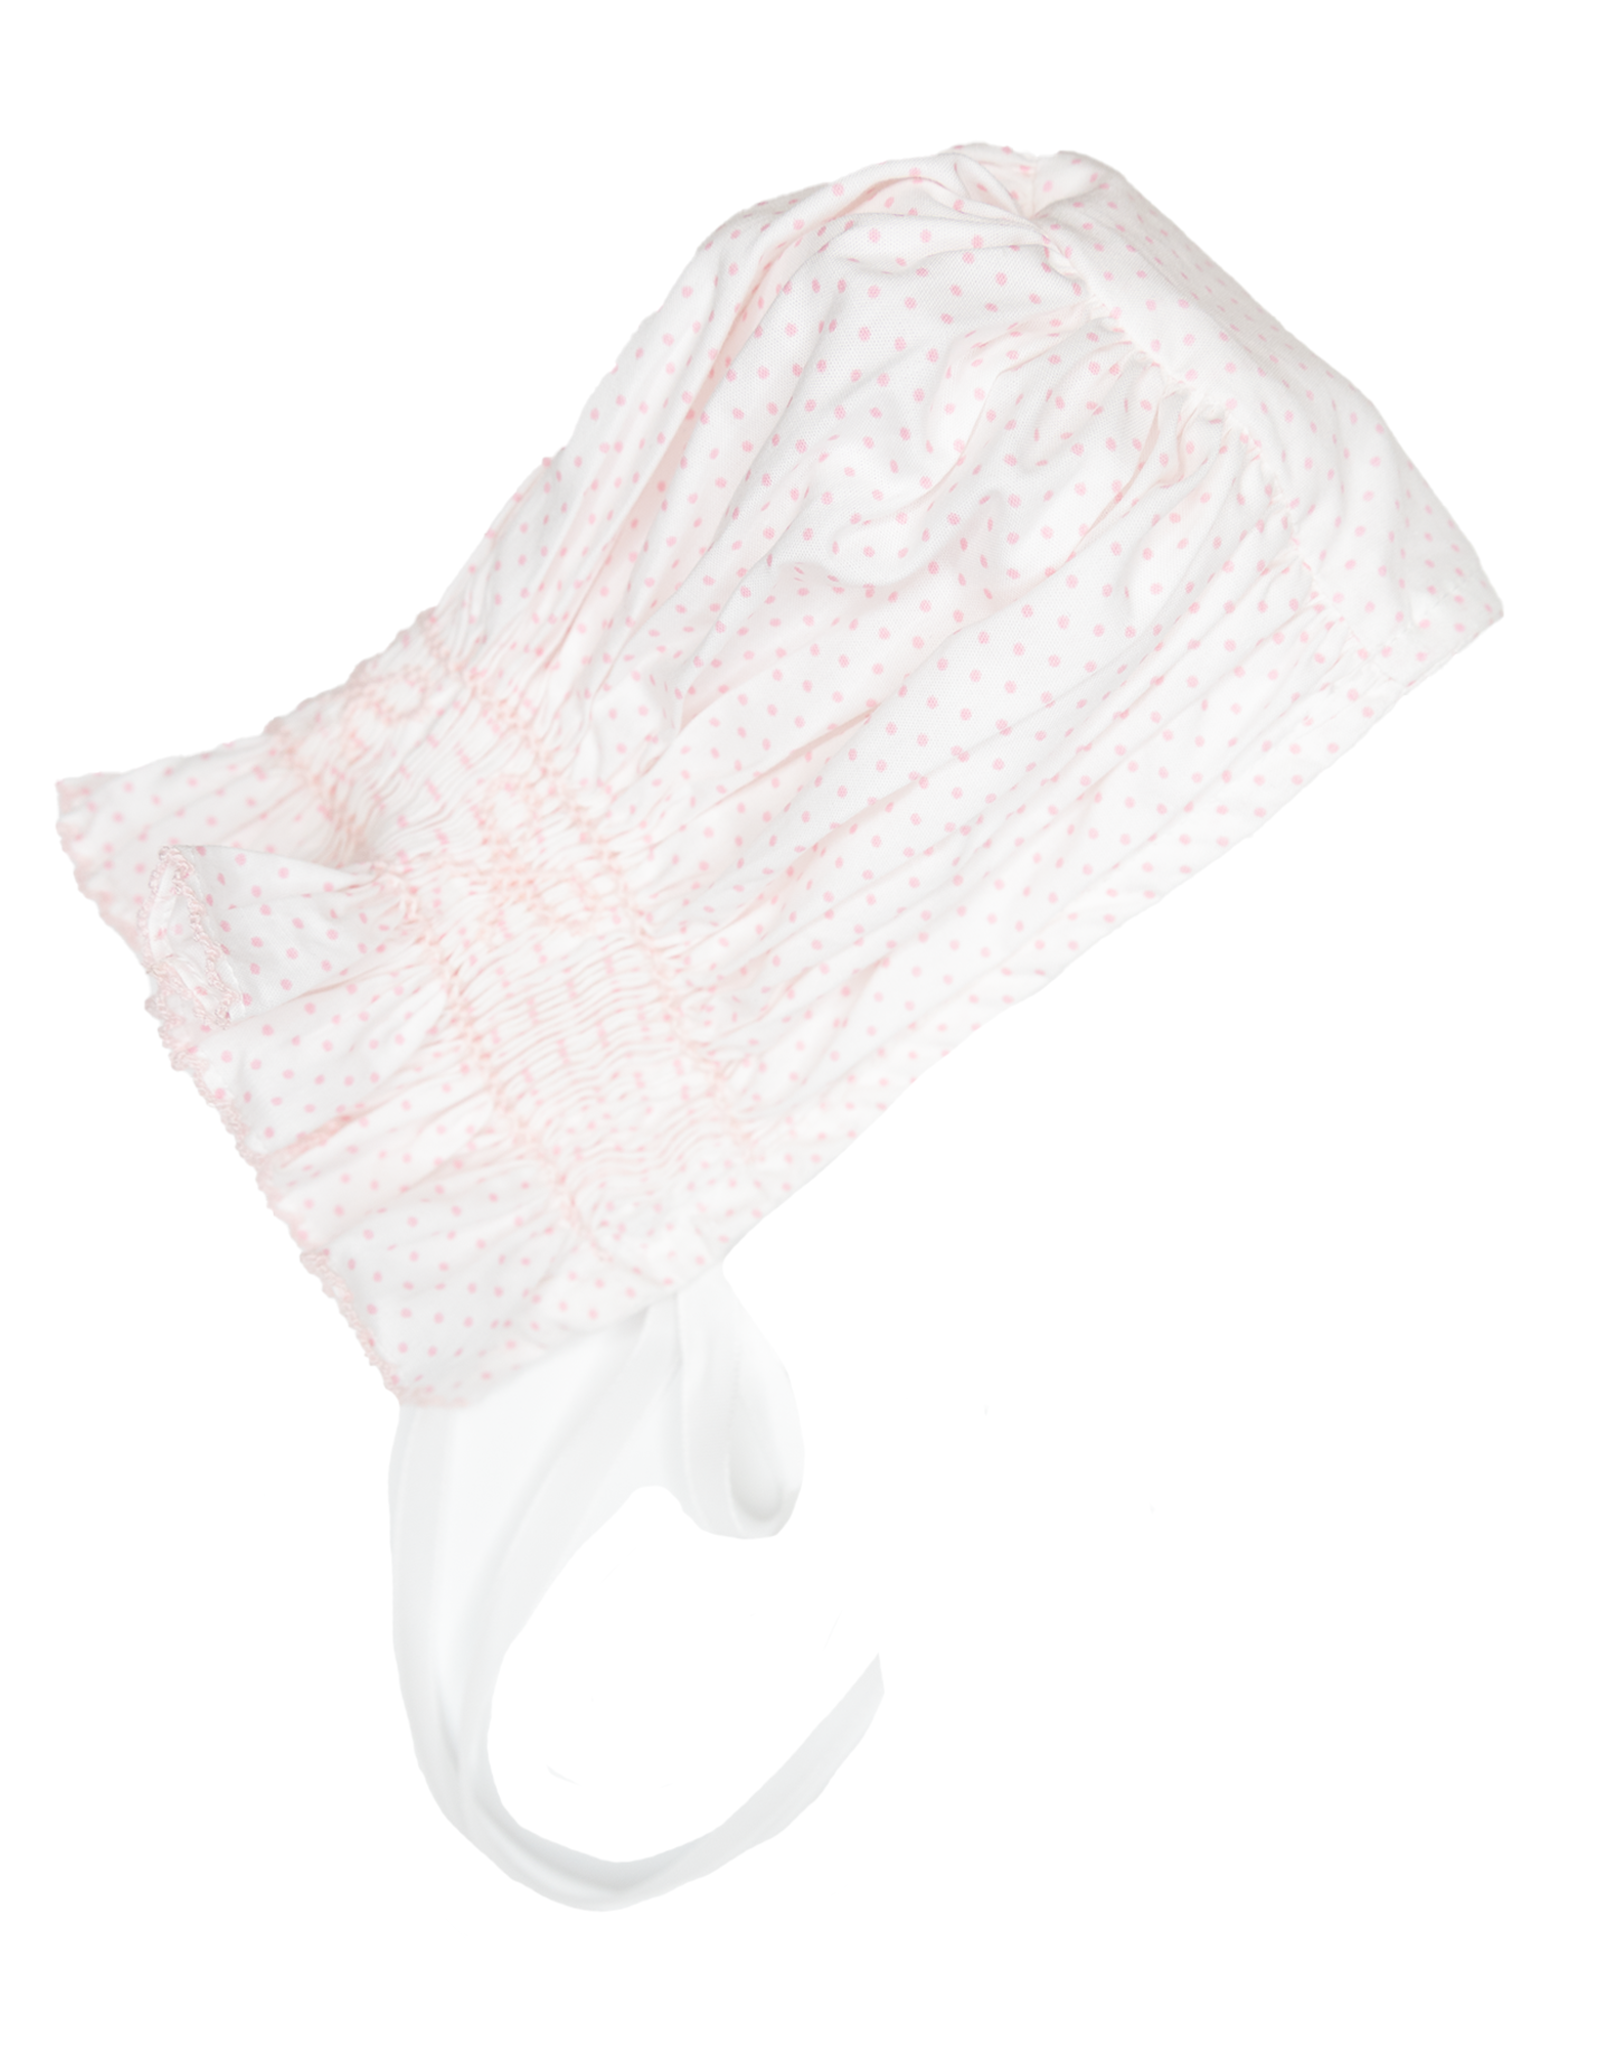 Delaney L9 White/Pink Dot Smocked Bonnet Newborn